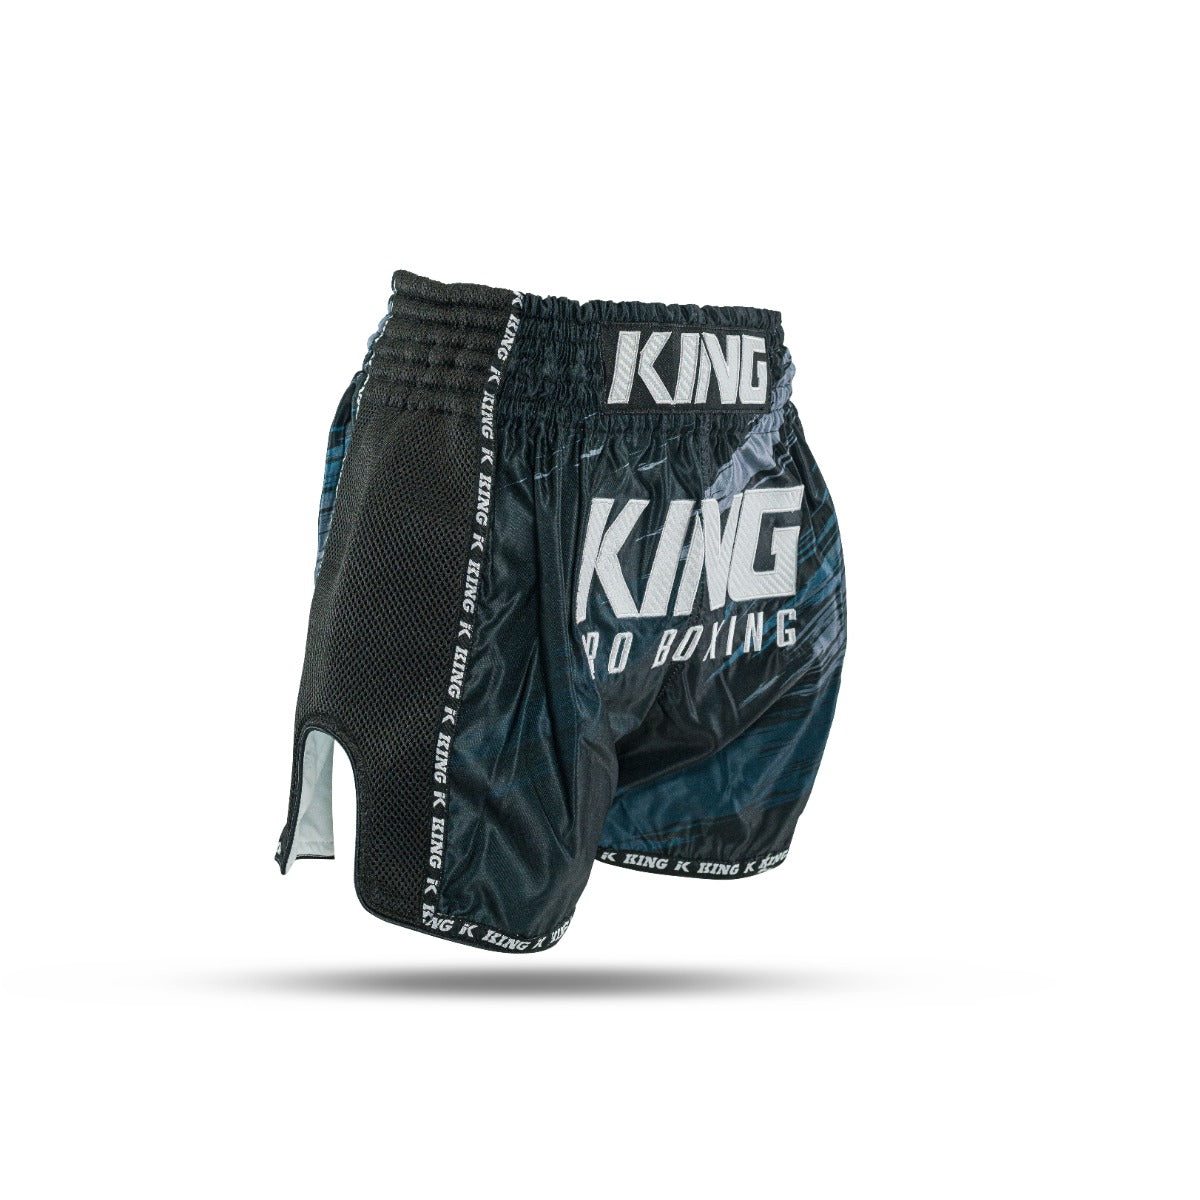 King PRO boxing muay Thai trunk - KPB STORM 1